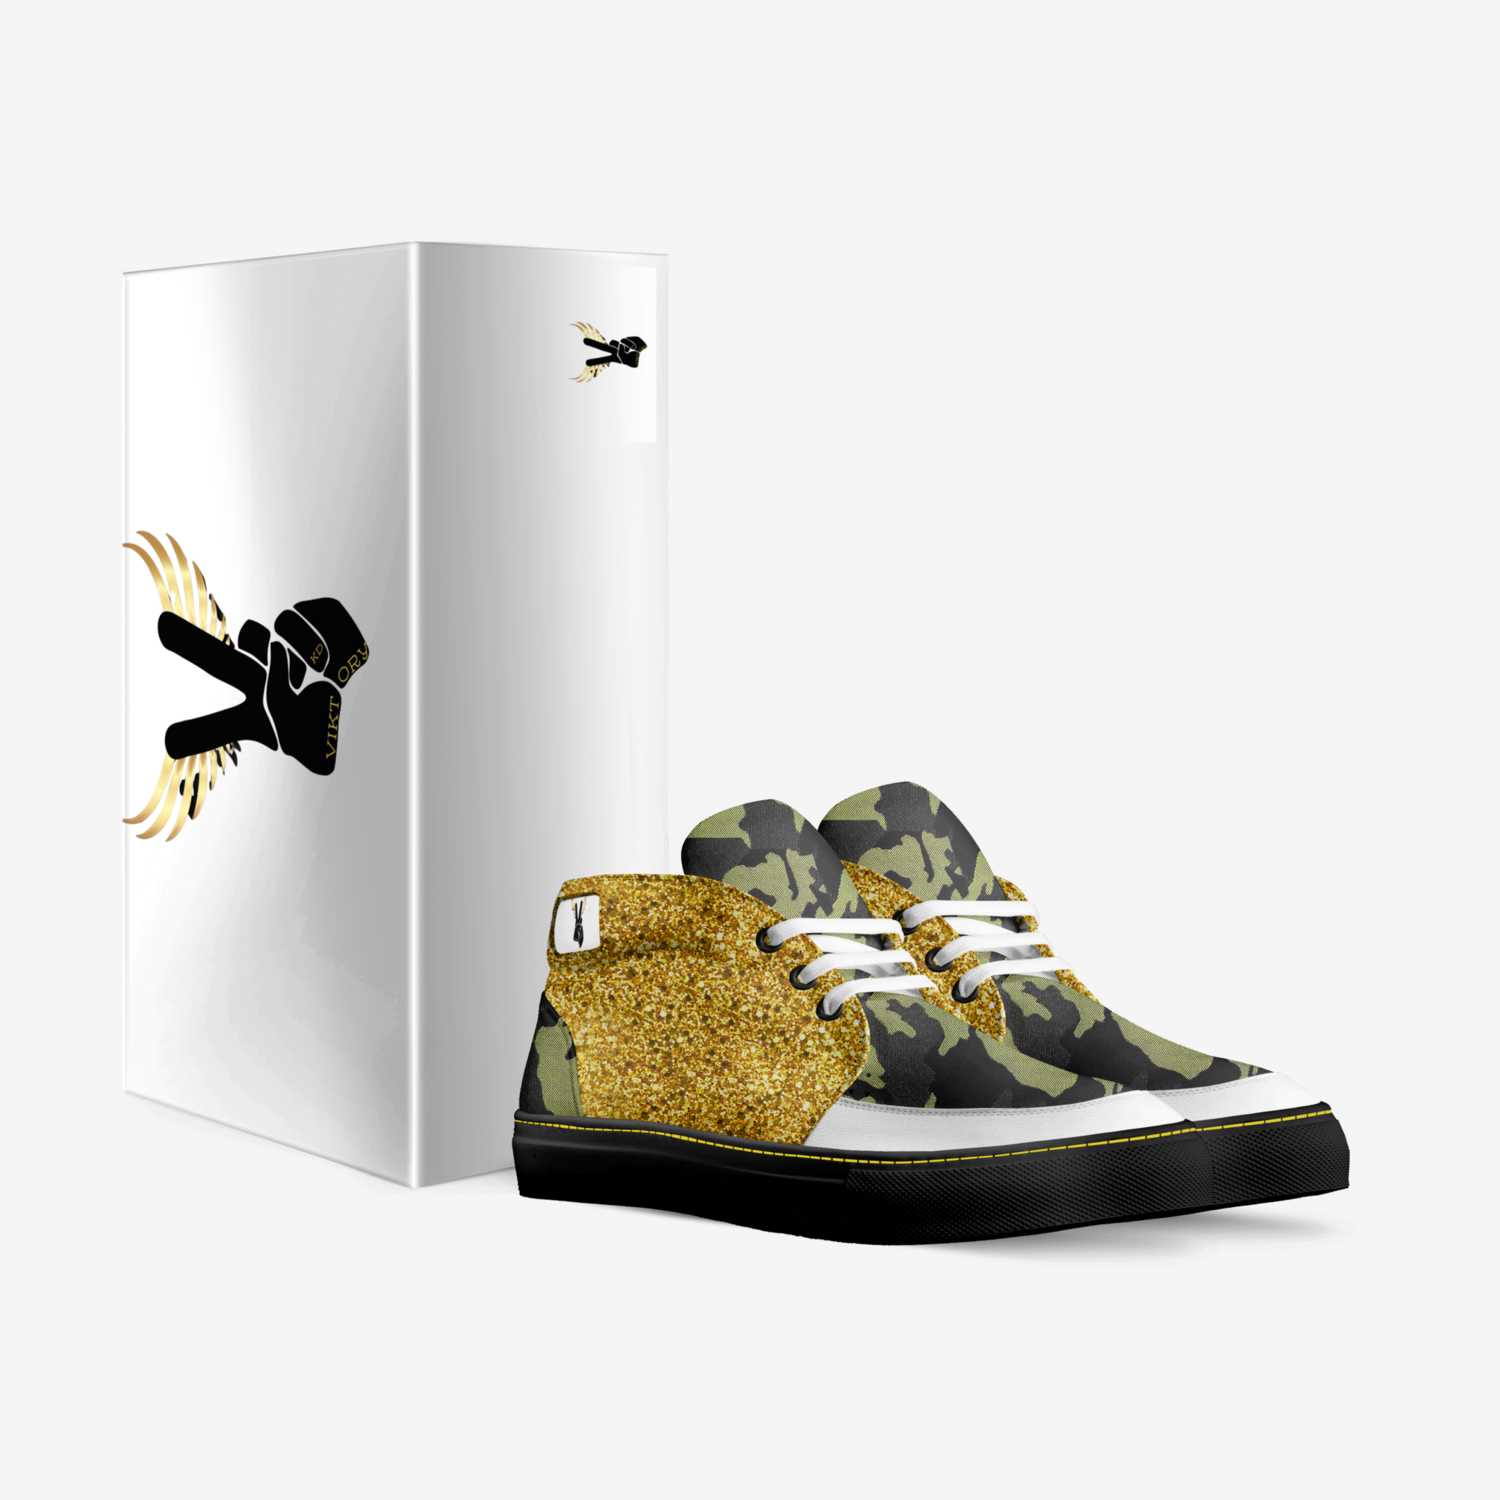 Viktory custom made in Italy shoes by Krystal Douglas | Box view